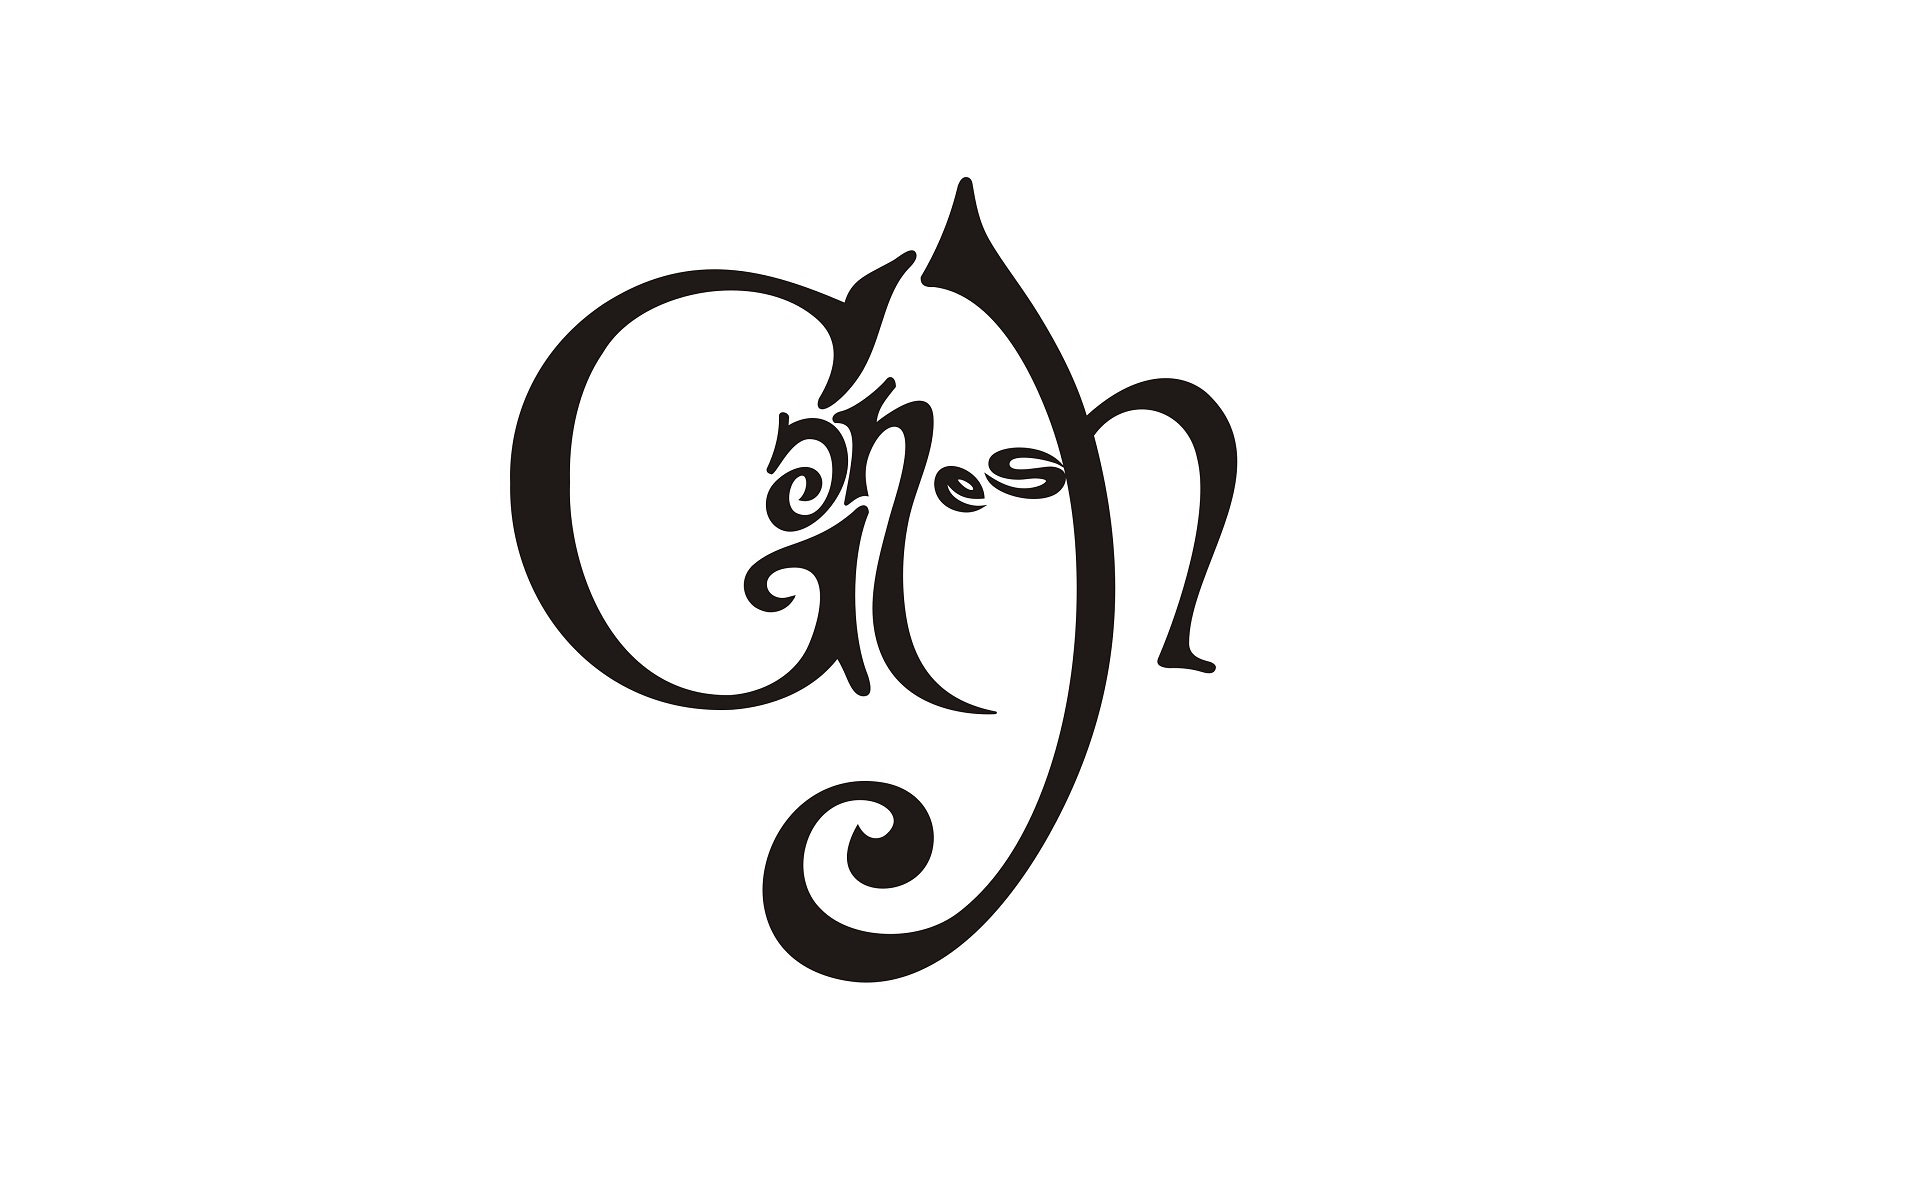 ganesh clip art vector free download - photo #44